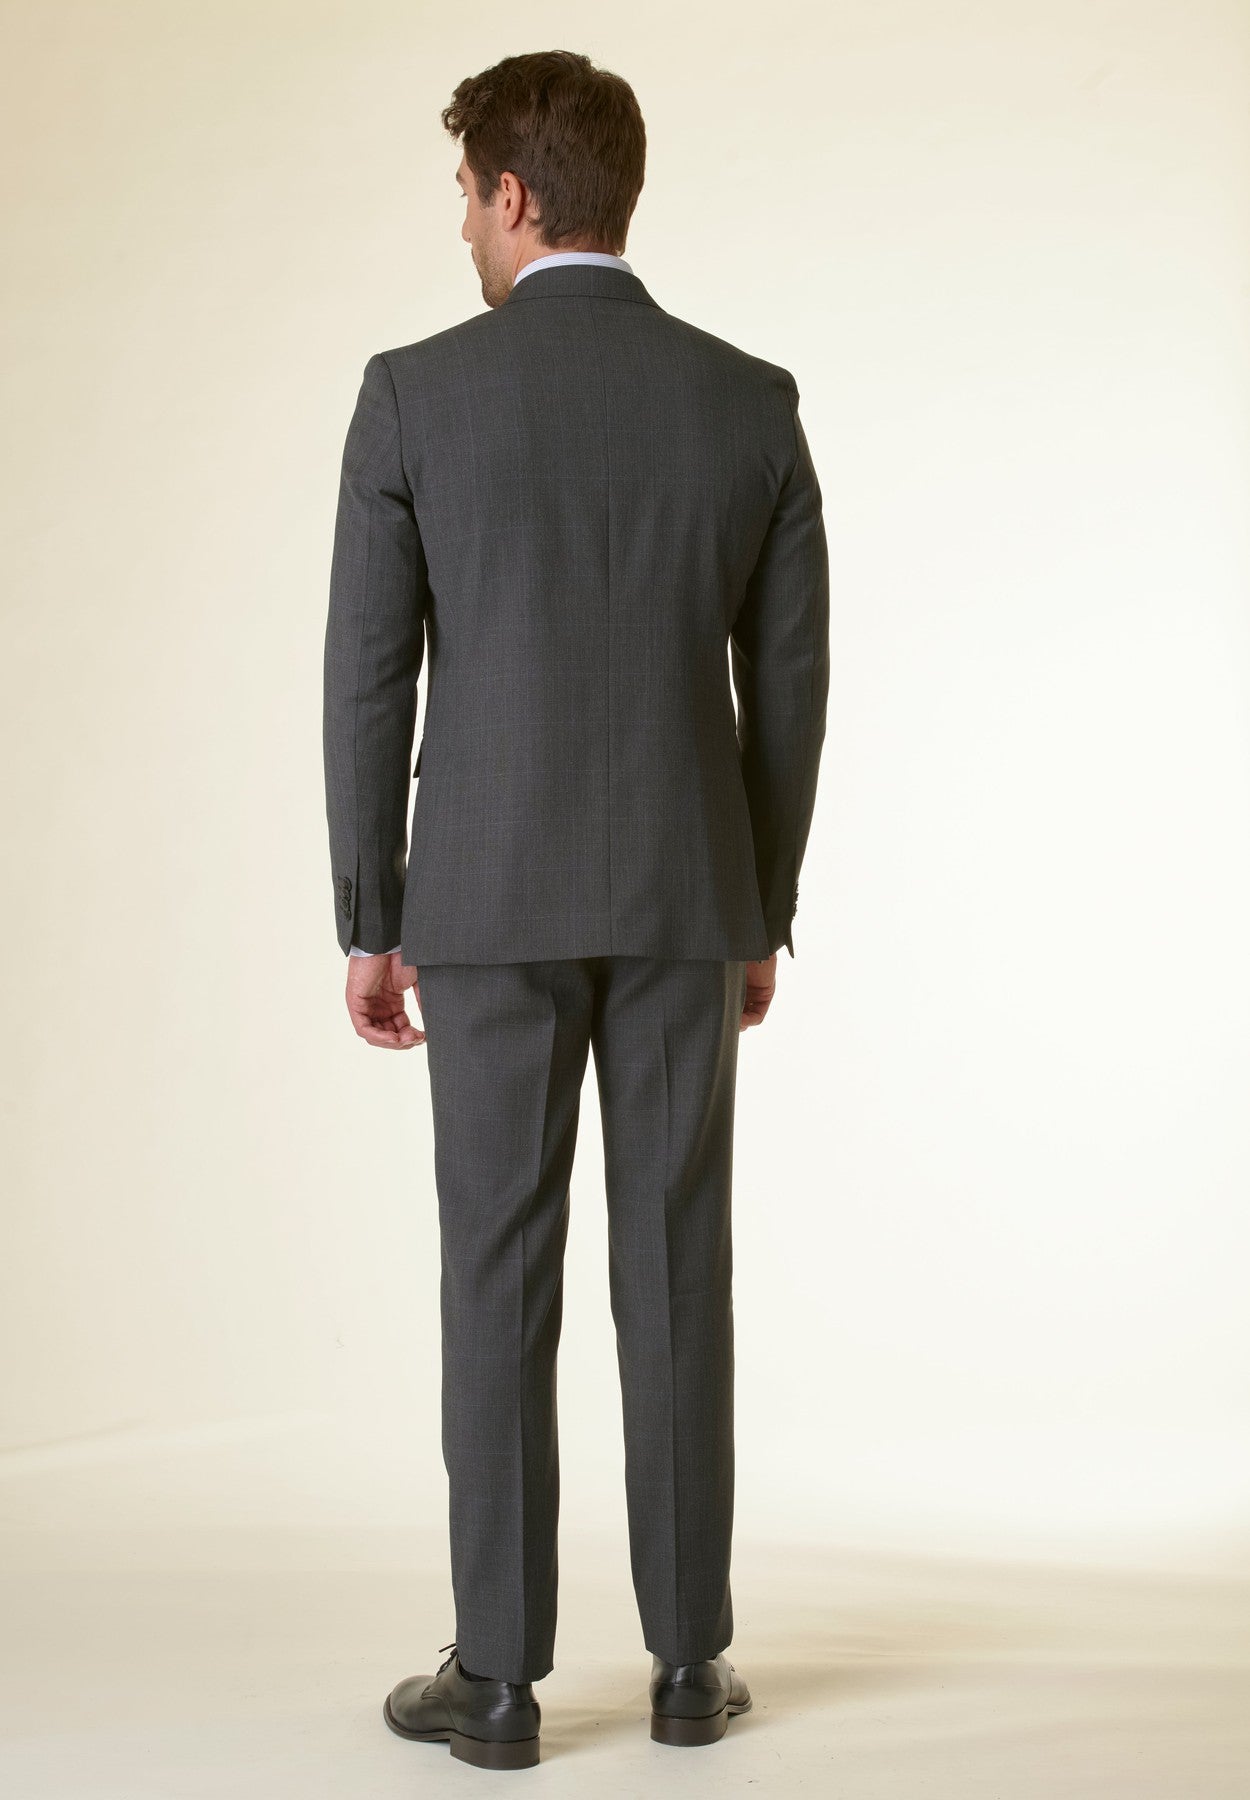 Anthracite Welsh custom fit suit